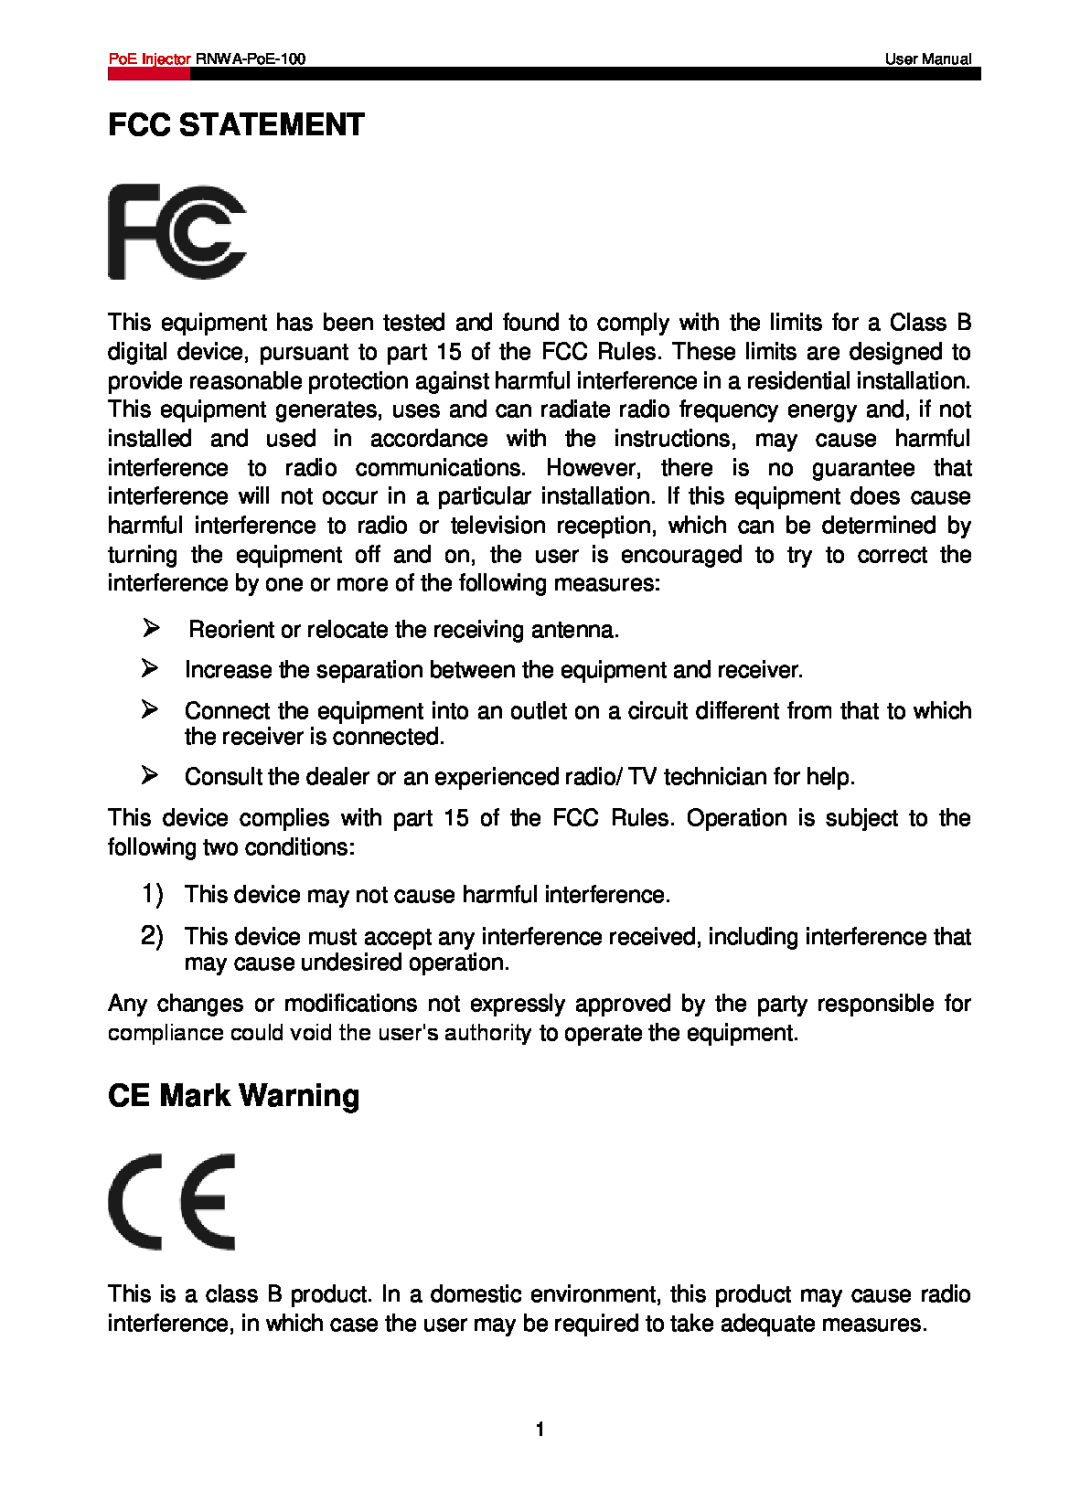 Rosewill RNWA-PoE-100 user manual Fcc Statement, CE Mark Warning 